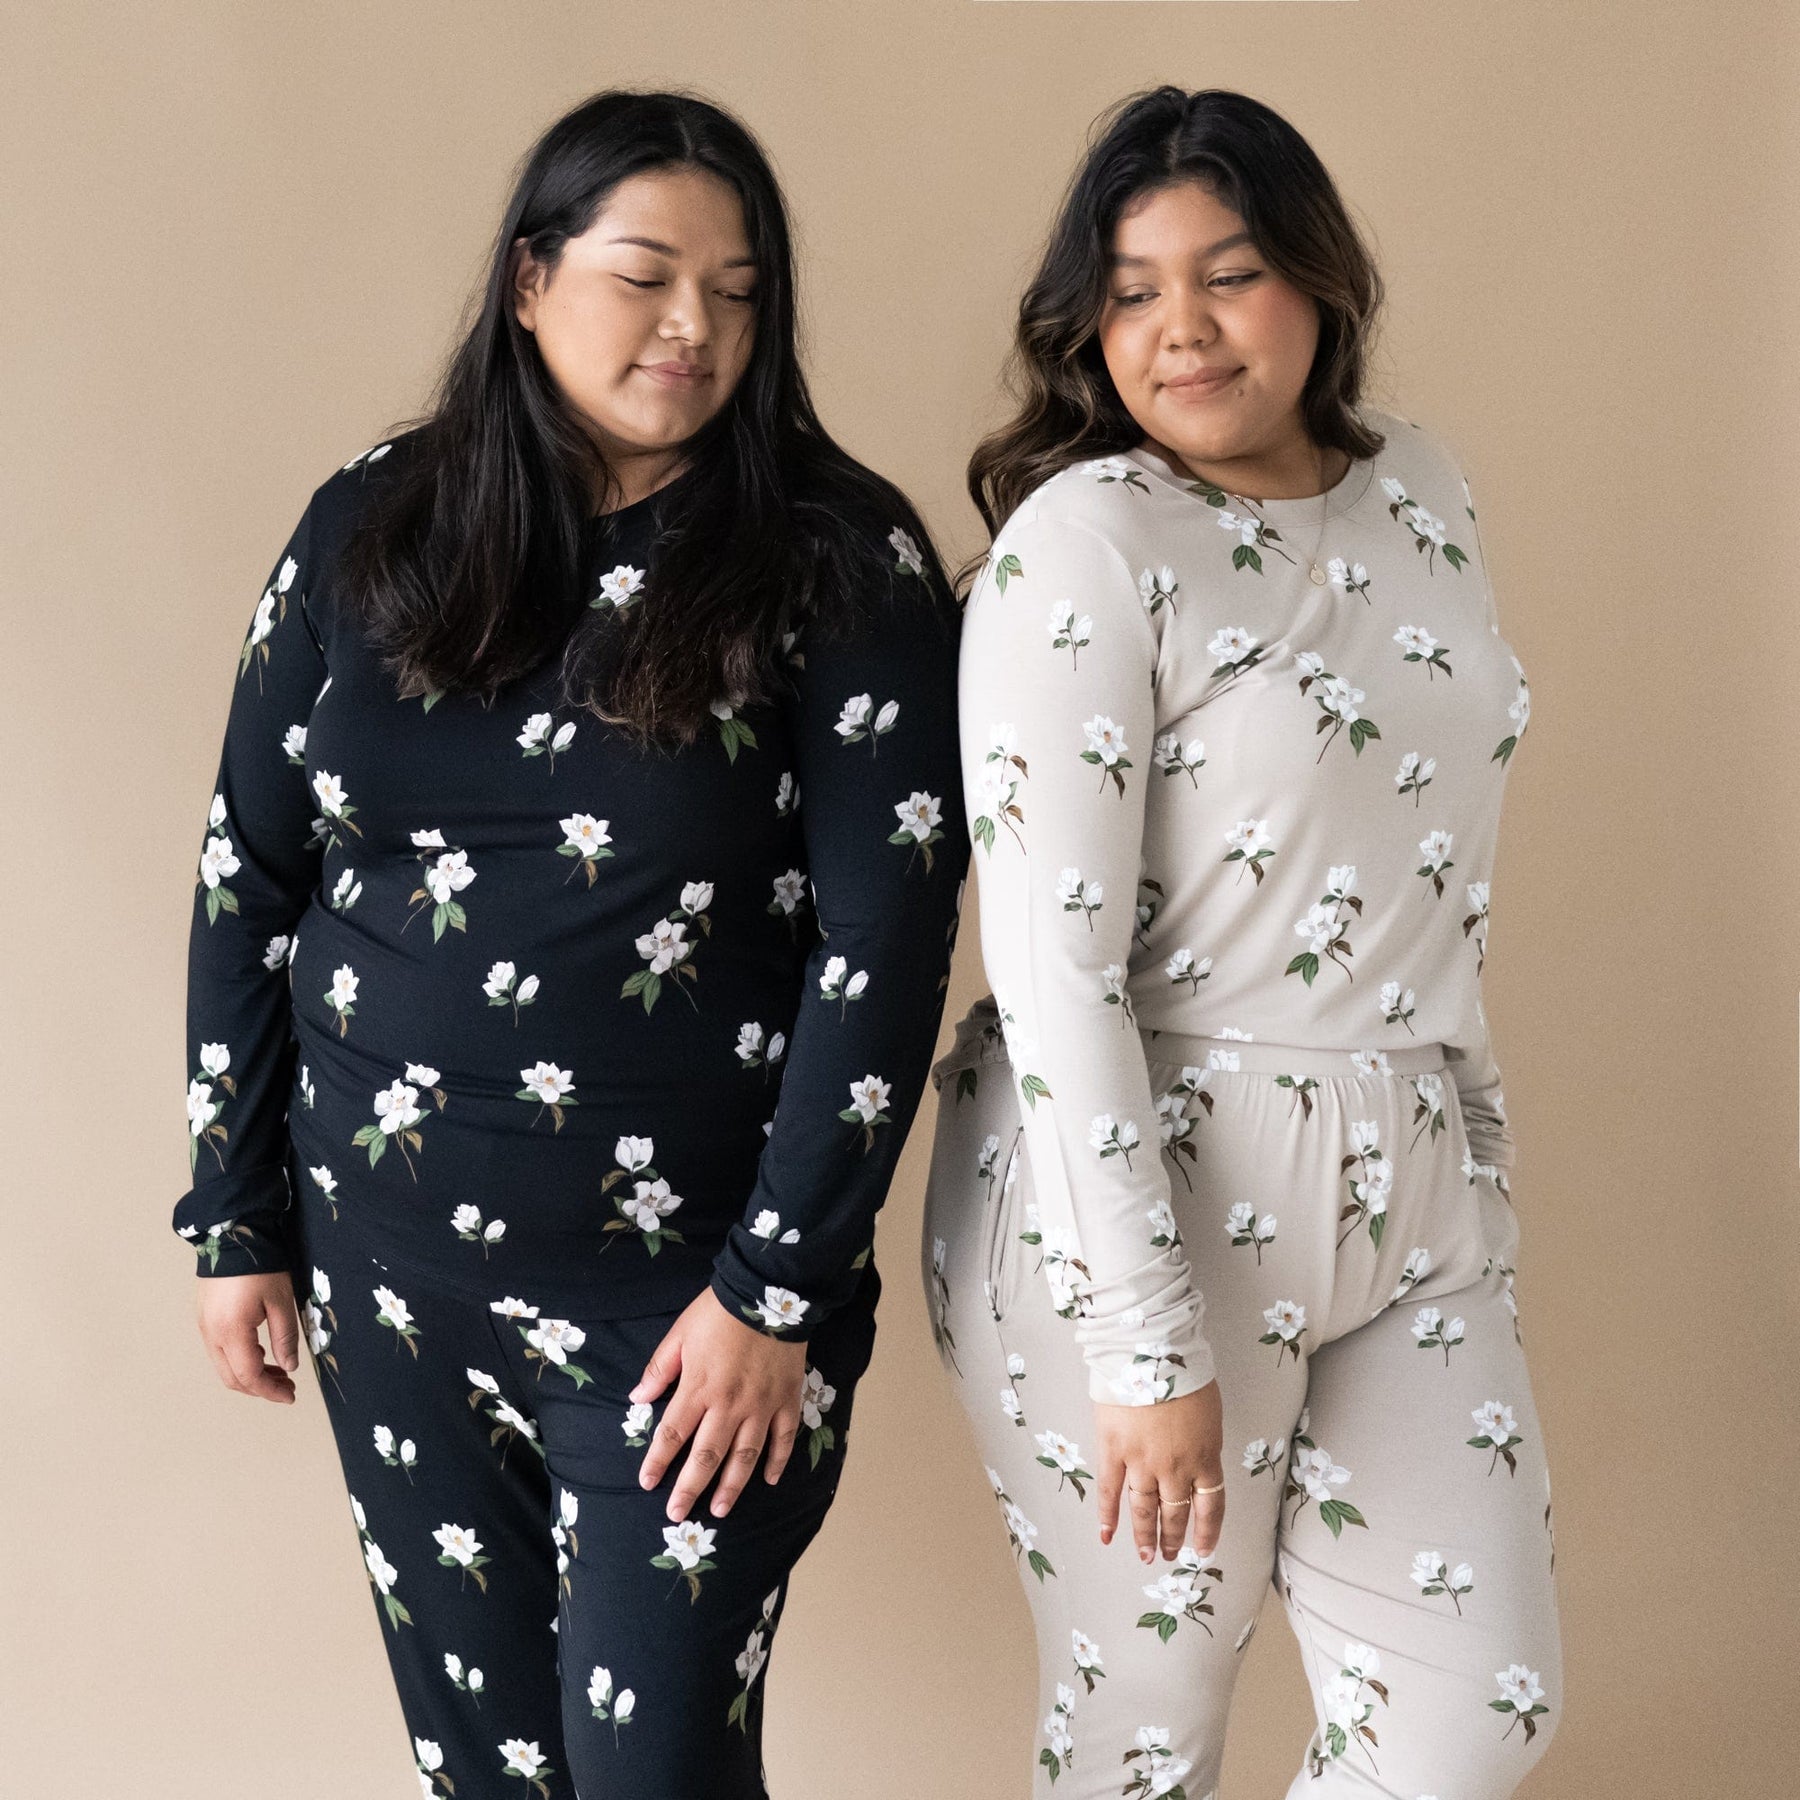 Women wearing Kyte Baby women's jogger pajama sets in Magnolia pattern